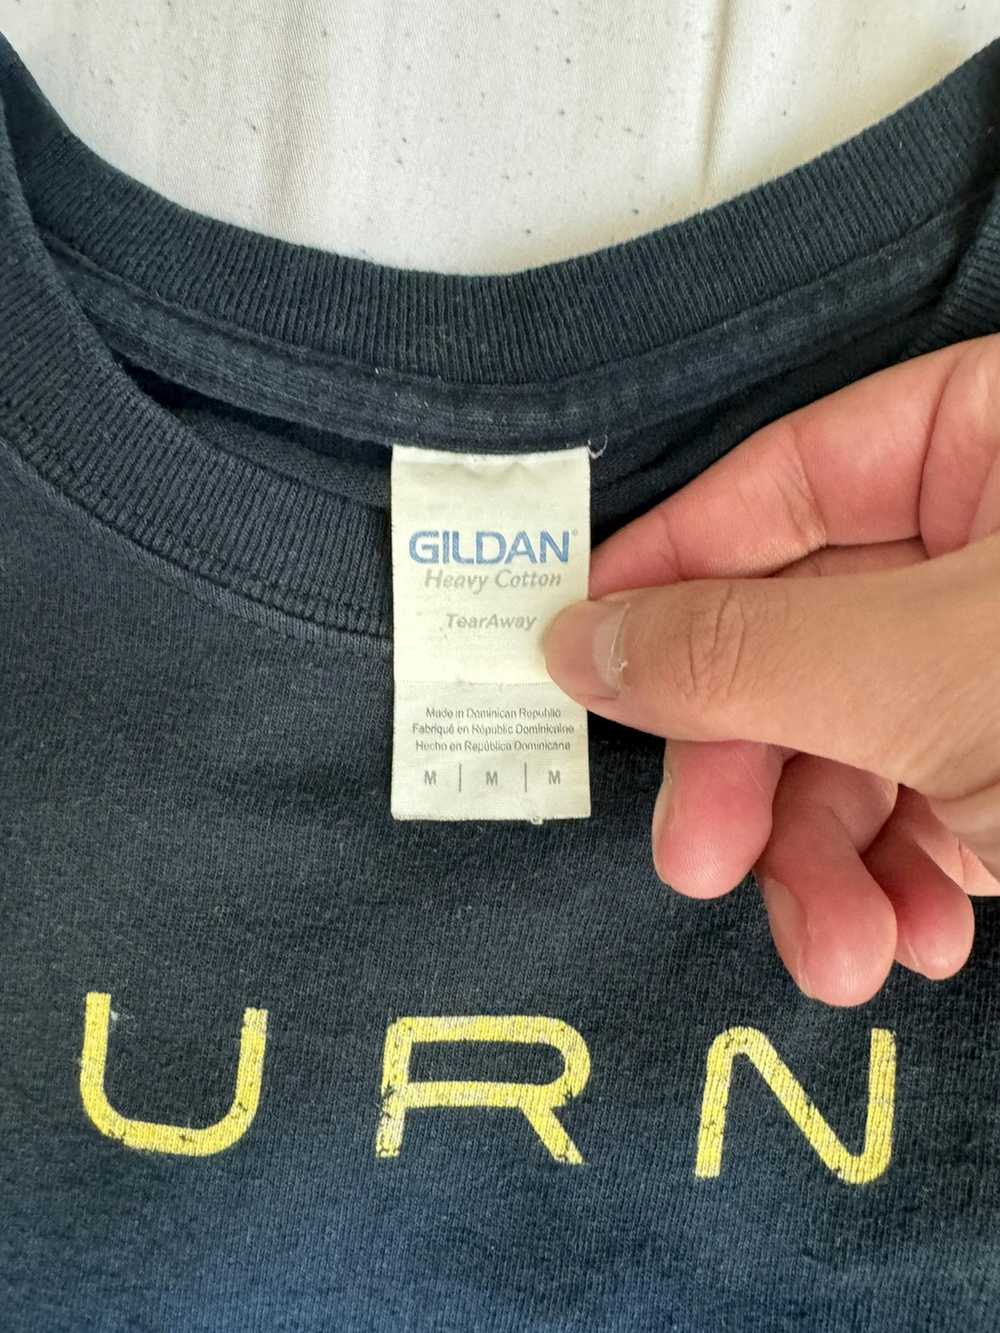 Gildan Journey 2016 Tour T-shirt - image 2